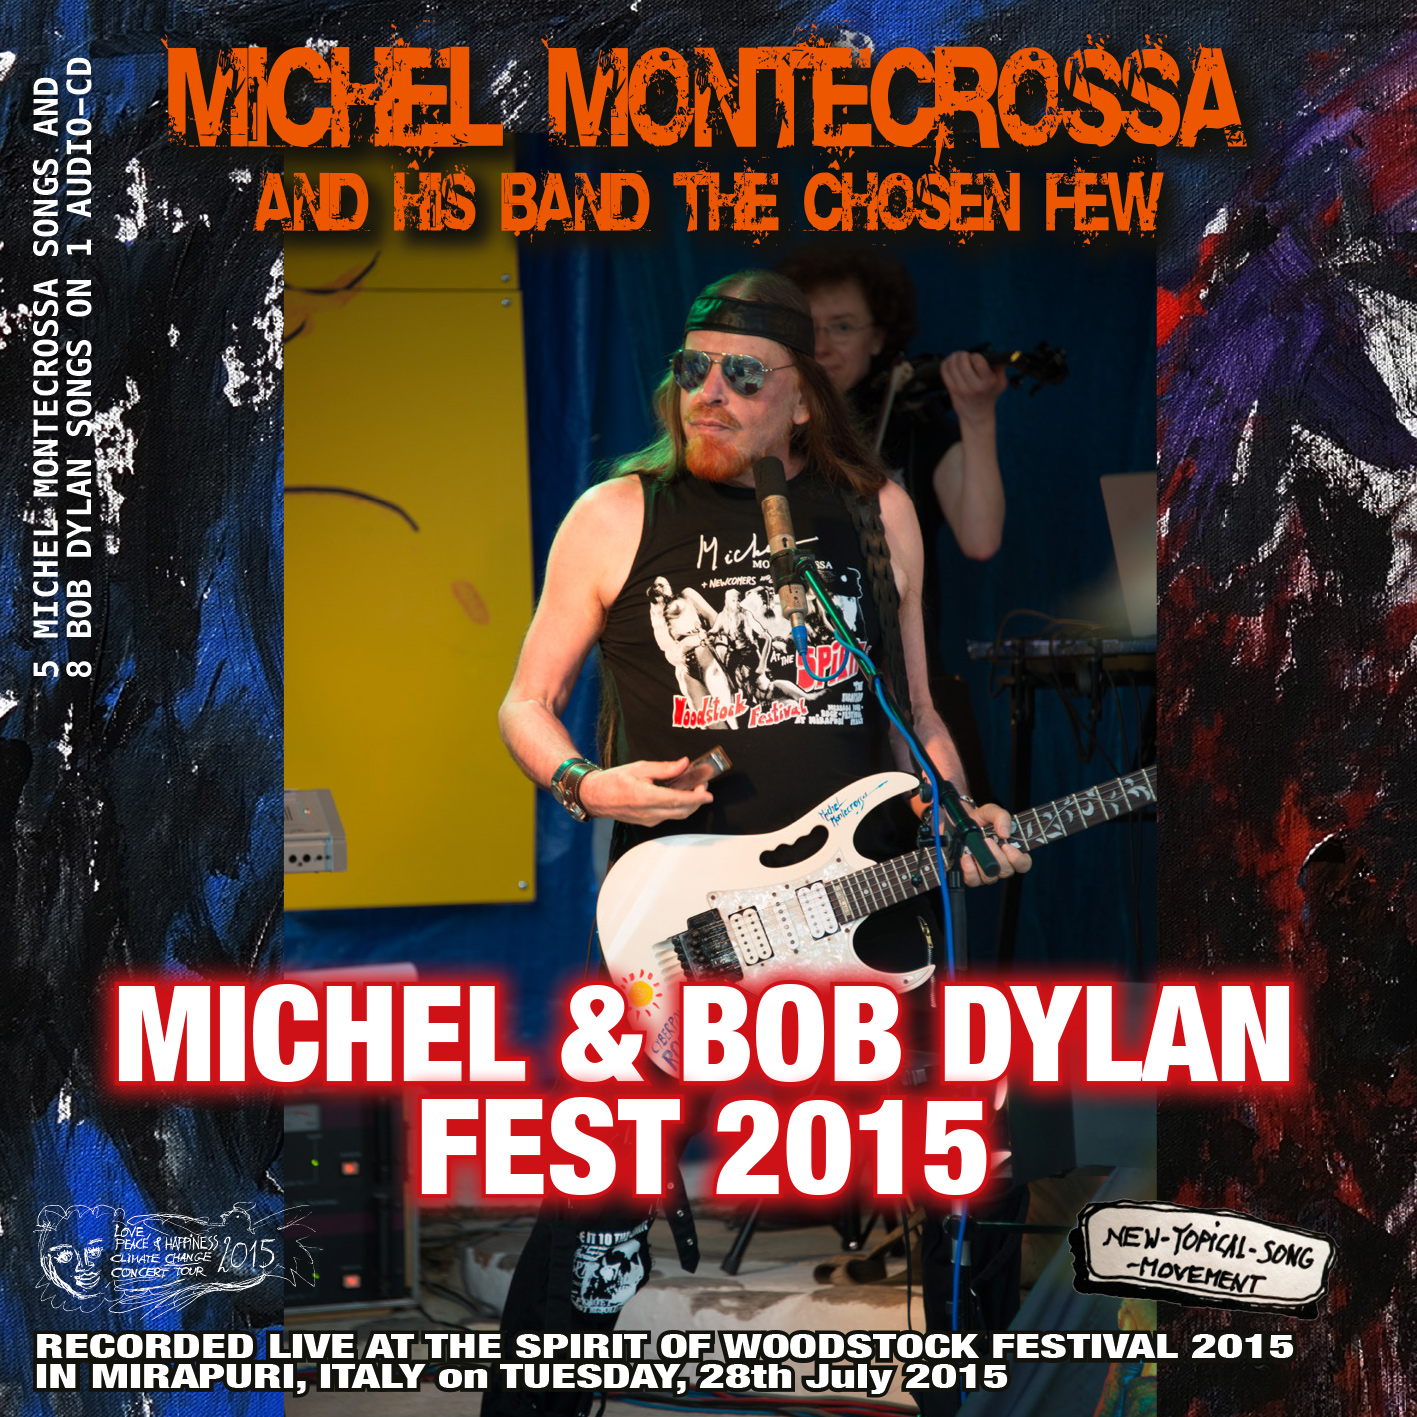 Michel Montecrossa's Michel & Bob Dylan Fest 2015